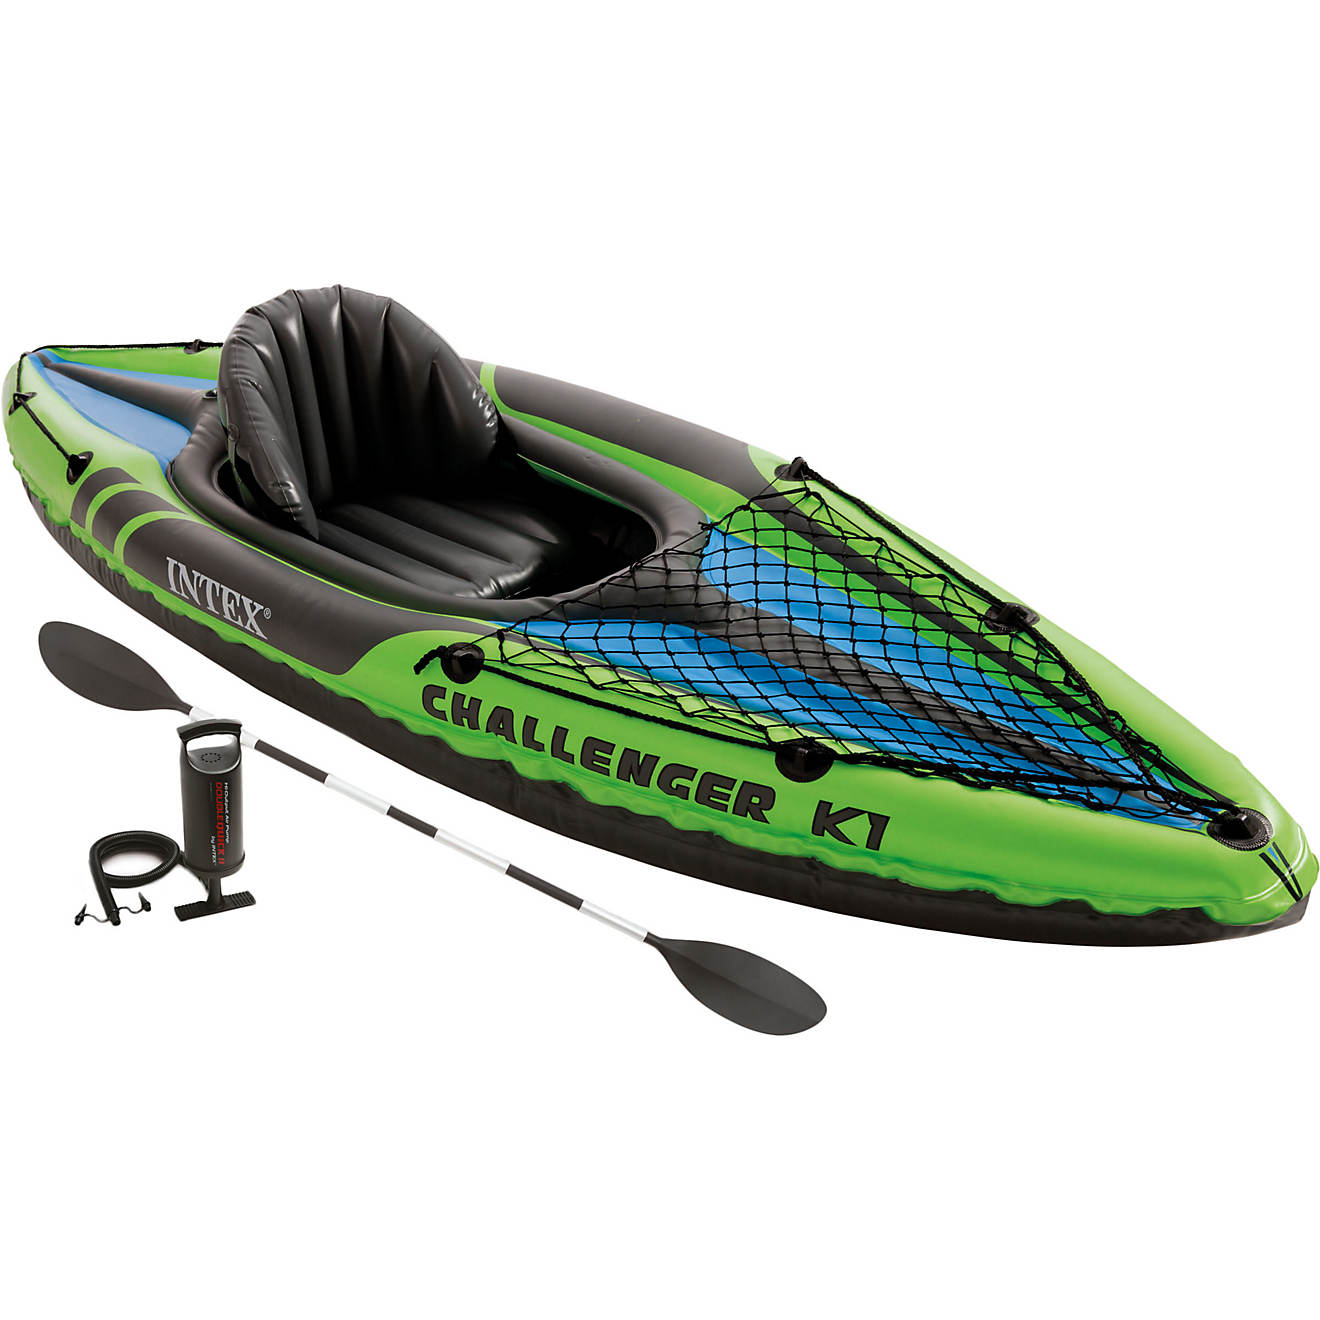 INTEX Challenger K1 9 ft Inflatable Kayak                                                                                        - view number 1